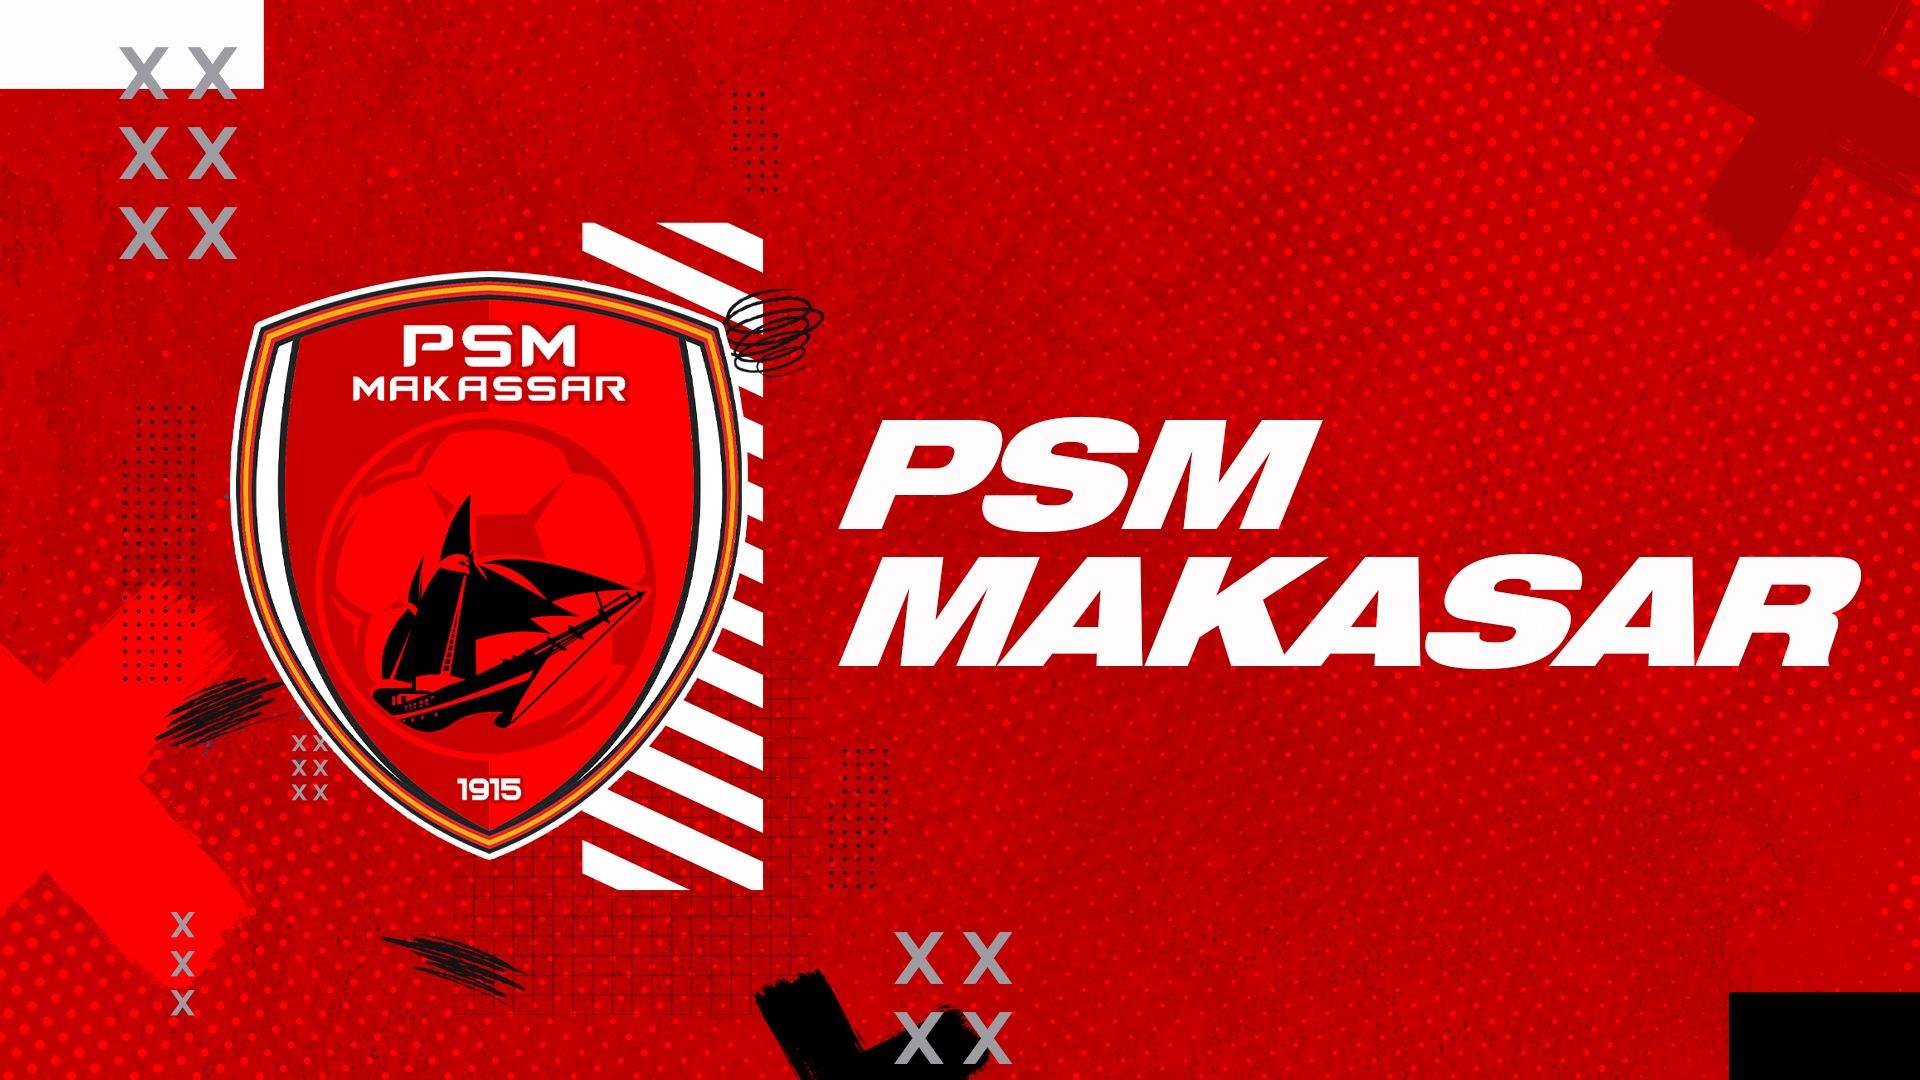 PSM Makasar.jpg